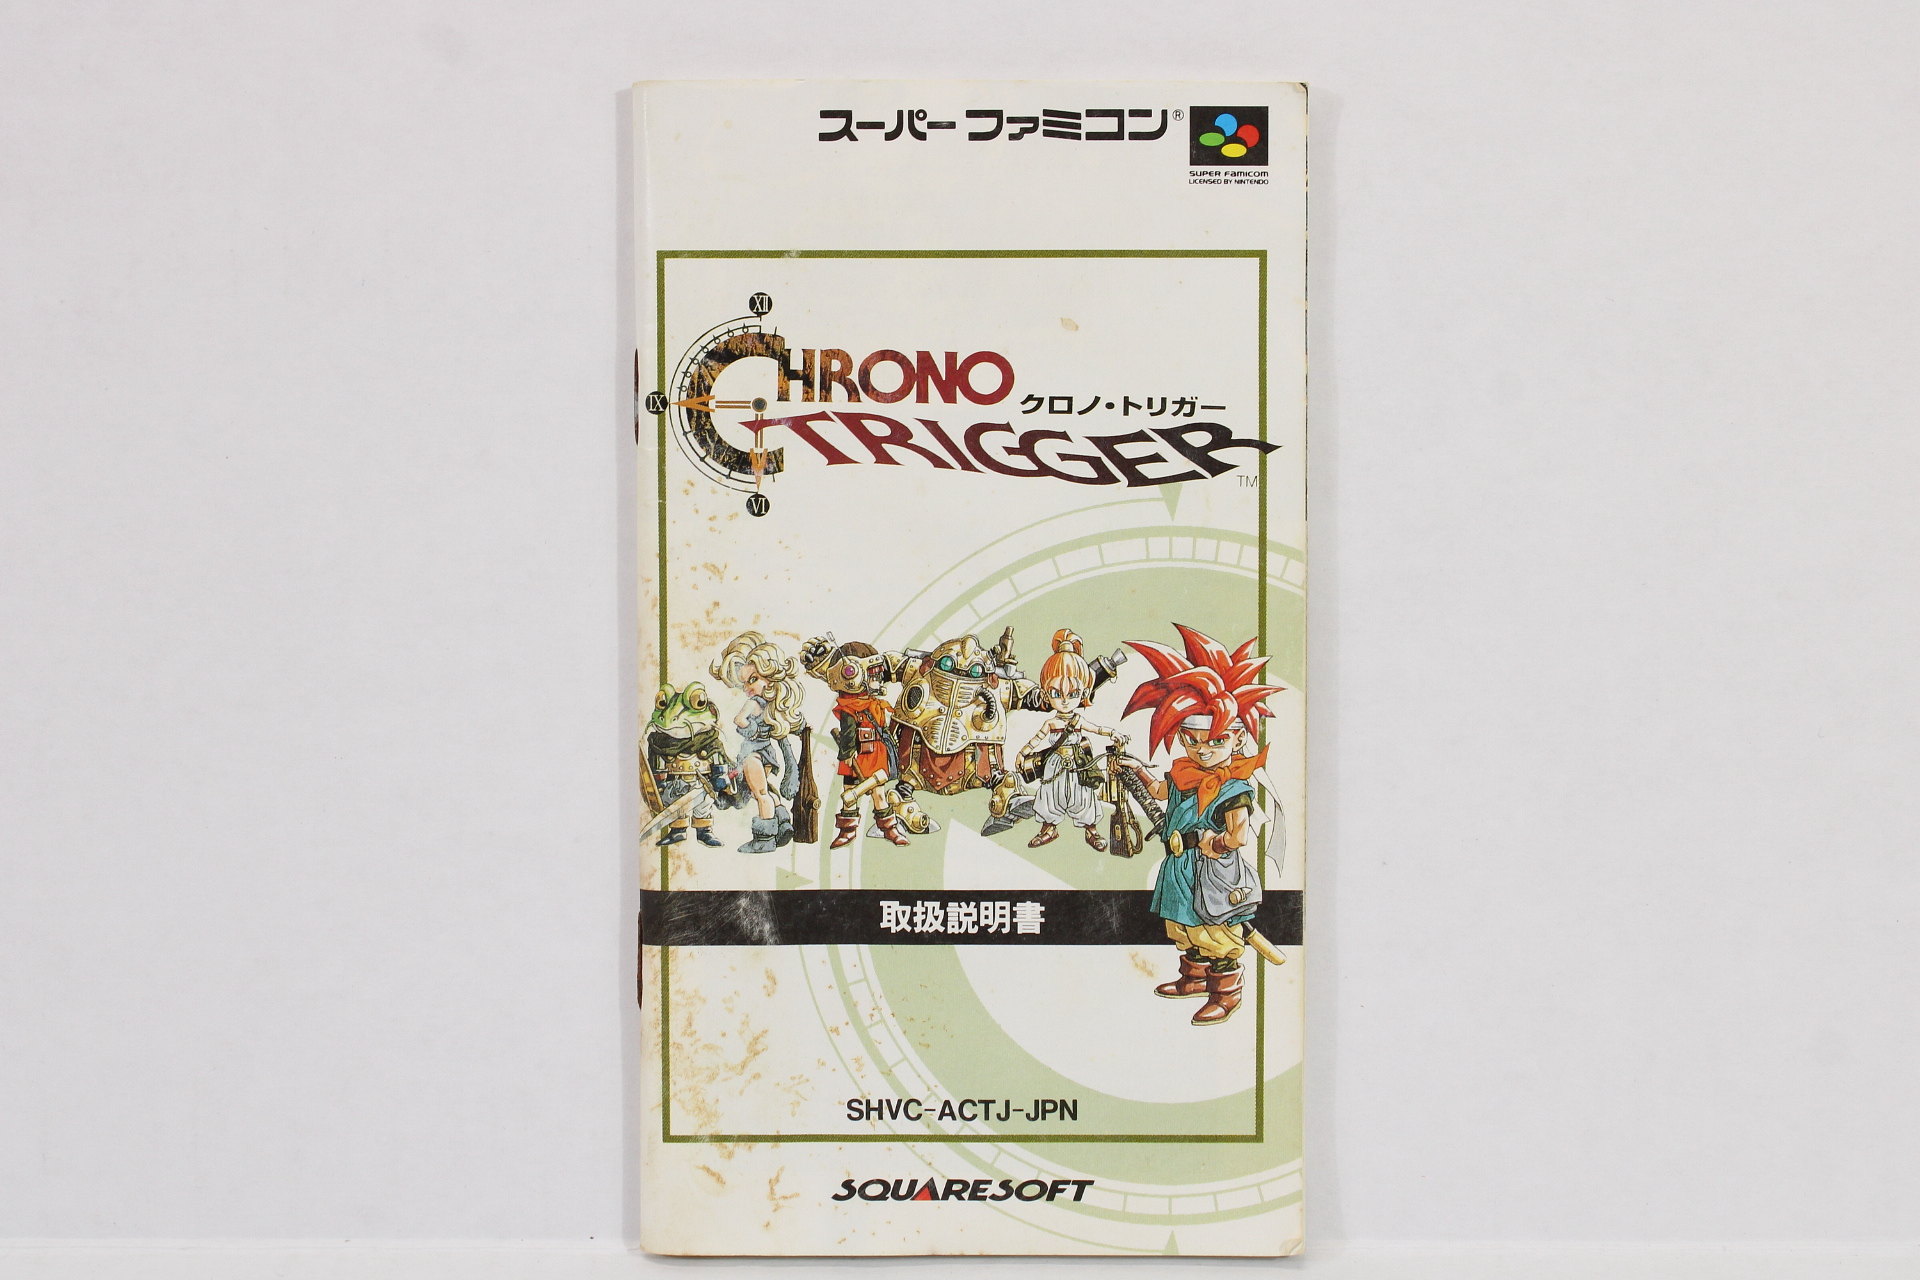 SNES -- Chrono Trigger -- Boxed. CanSave! Super famicom. Japan Game. 14892